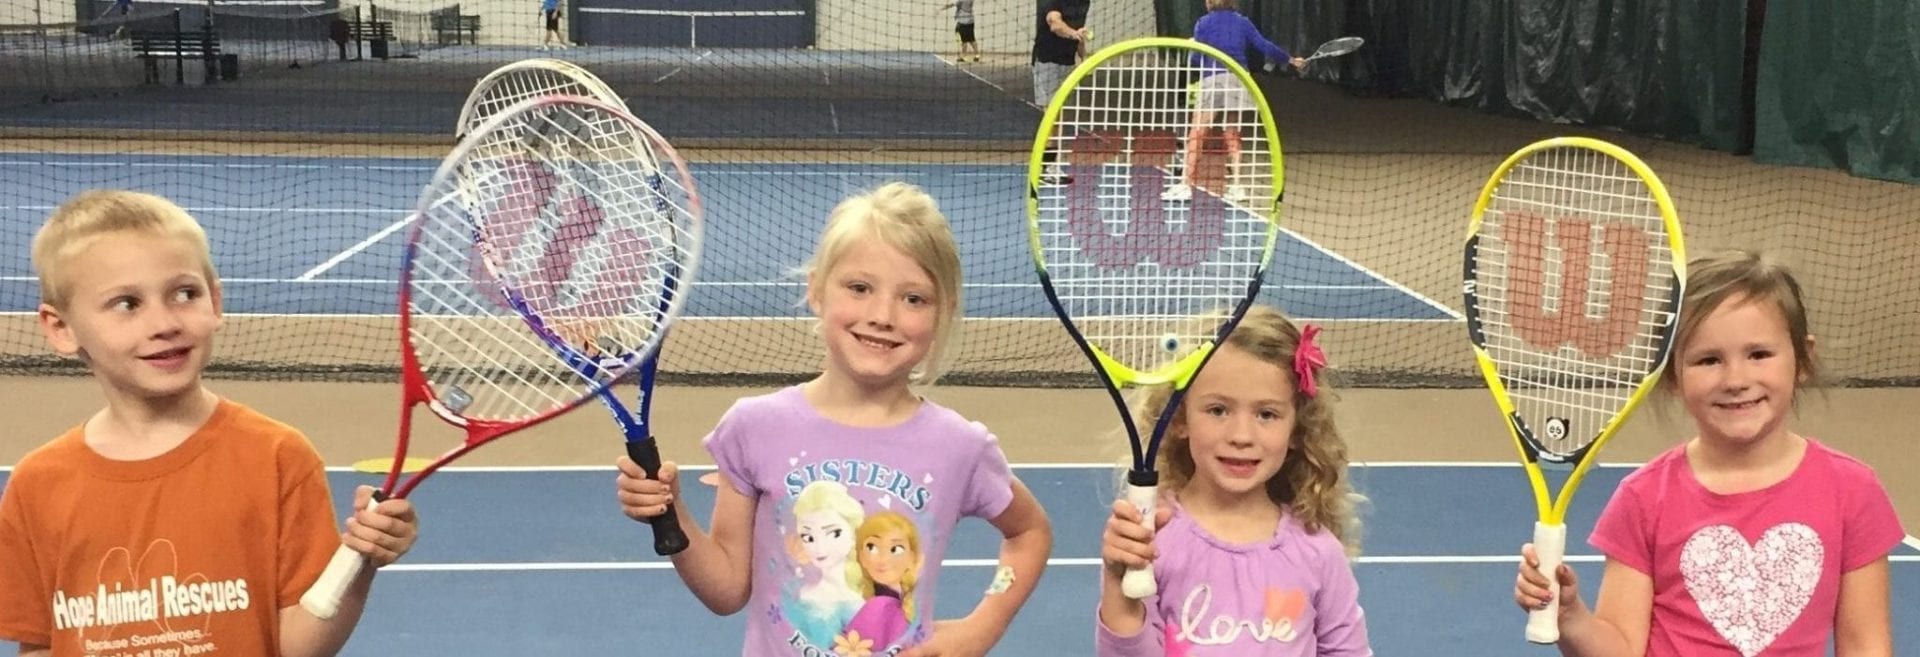 4 kids holding tennis rackets up